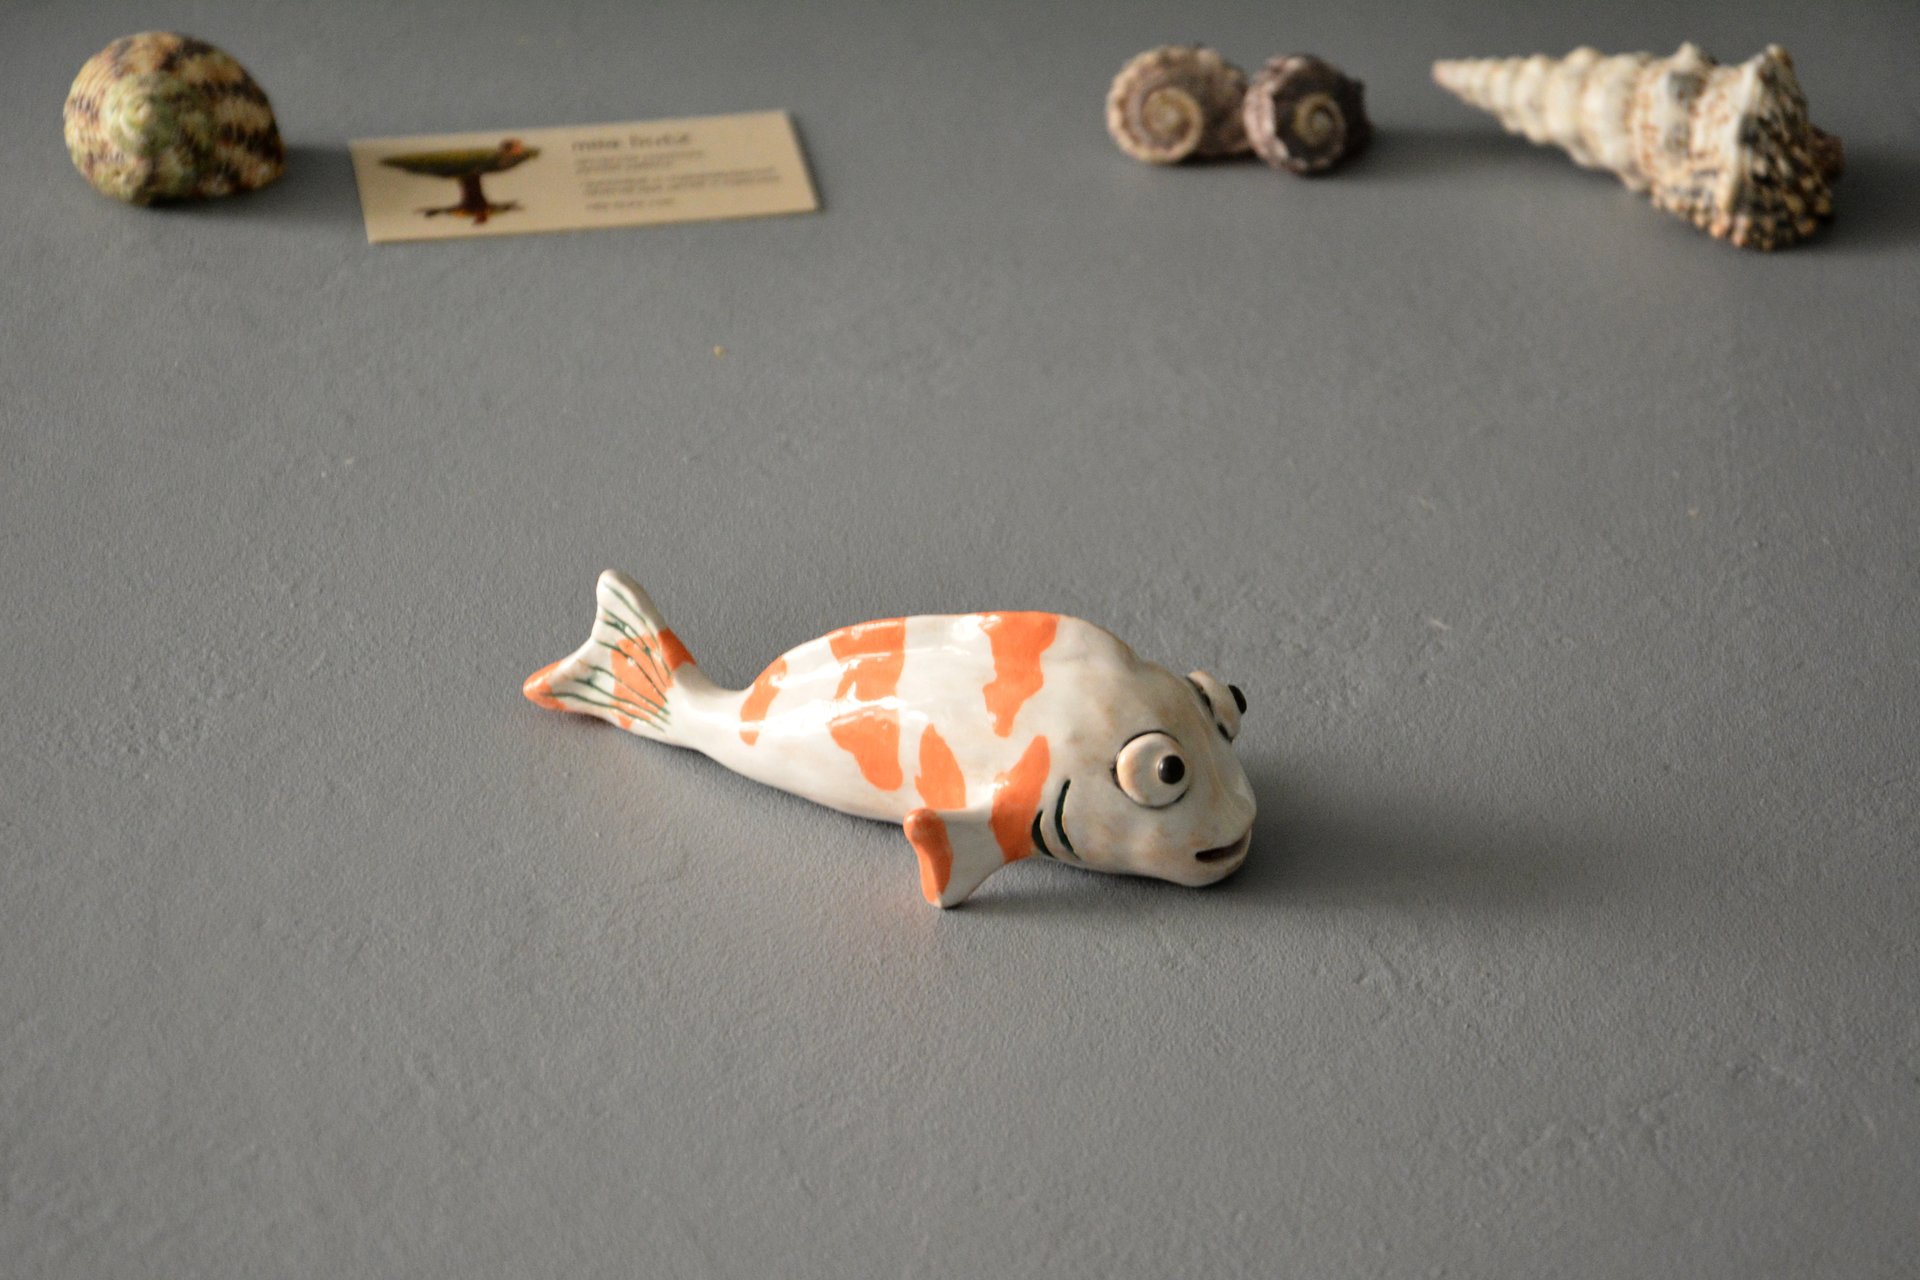 Ceramic Figurine of the Koi fish carp, length - 14 cm, width - 6 cm, height - 5 cm, photo 4 of 6.